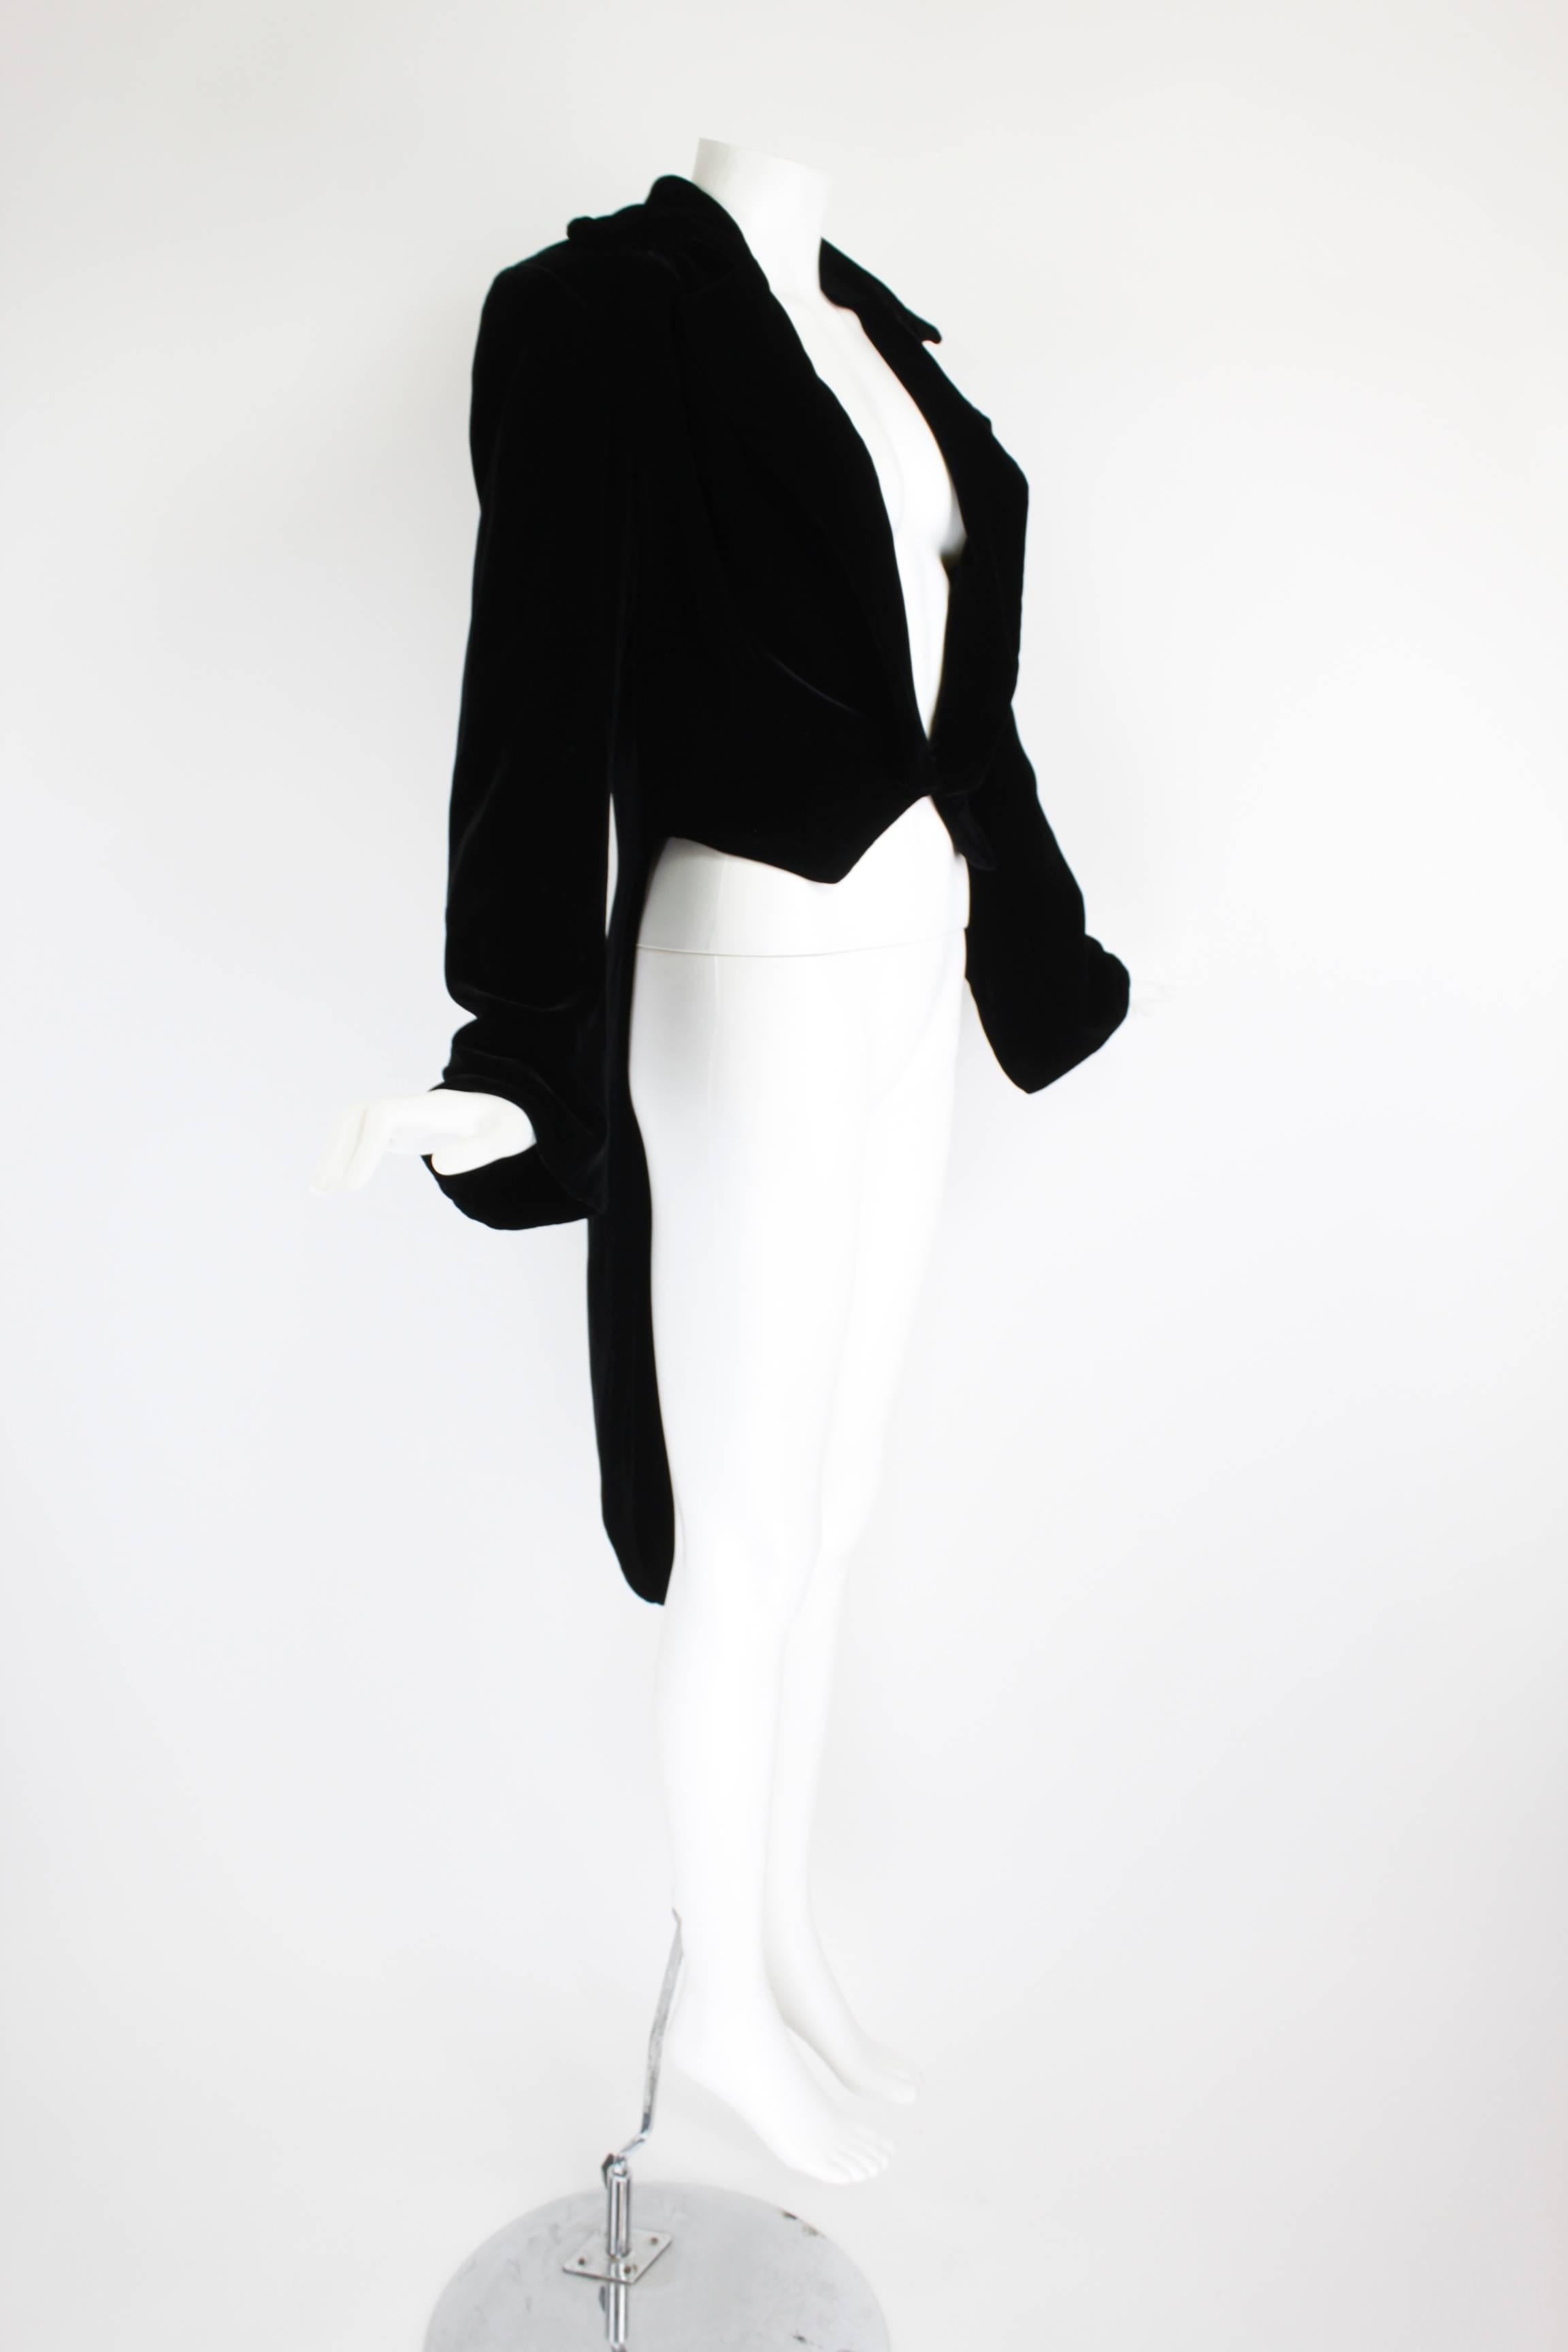 1990s OMO Norma Kamali Black Velvet Tailcoat

Measurements--
Bust: 38 inches
Waist: 34 inches
Length, Shoulder to Shoulder: 18 inches
Length, Shoulder to Cuff: 25 inches
Length, Center back to End of Tail: 44 inches